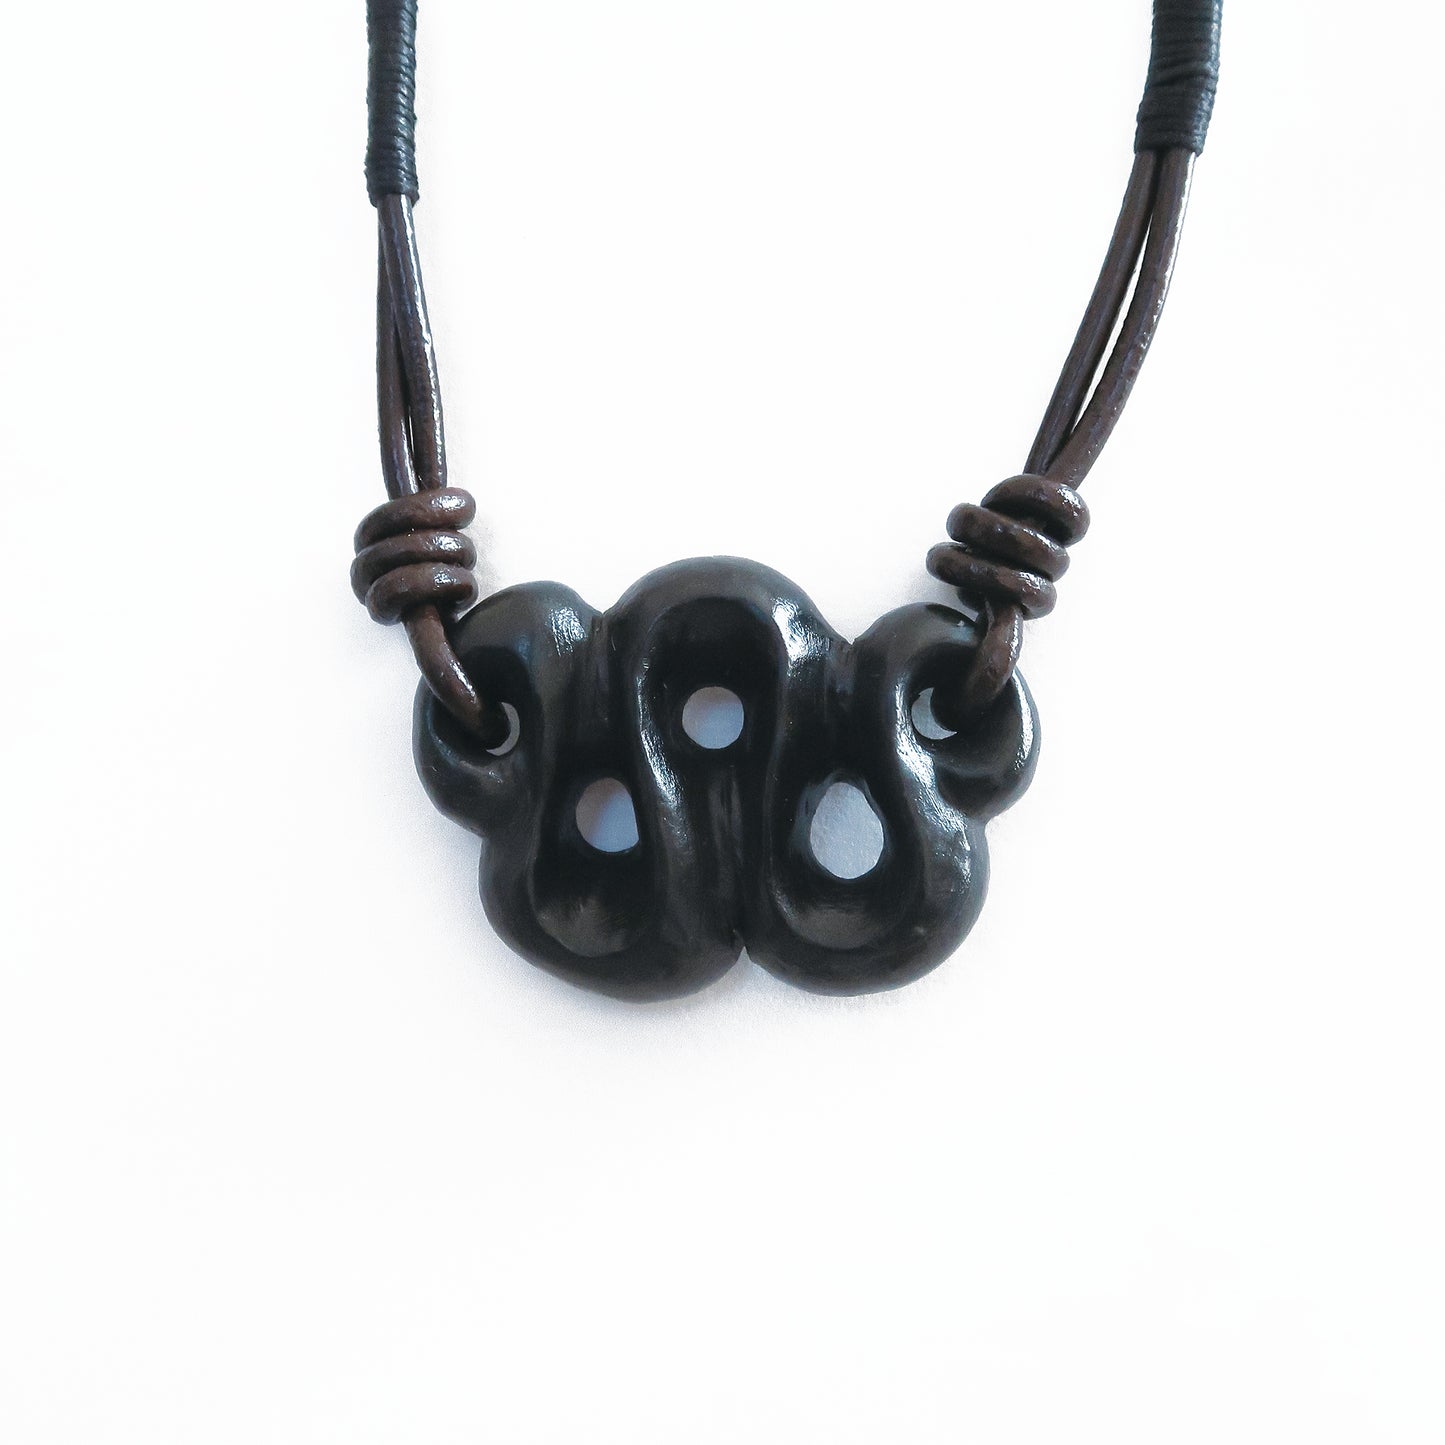 Koru (twist) symbol Necklace | Symbol of Harmony and Eternal Movement| Hand-Carved Stone Necklace Jewelry